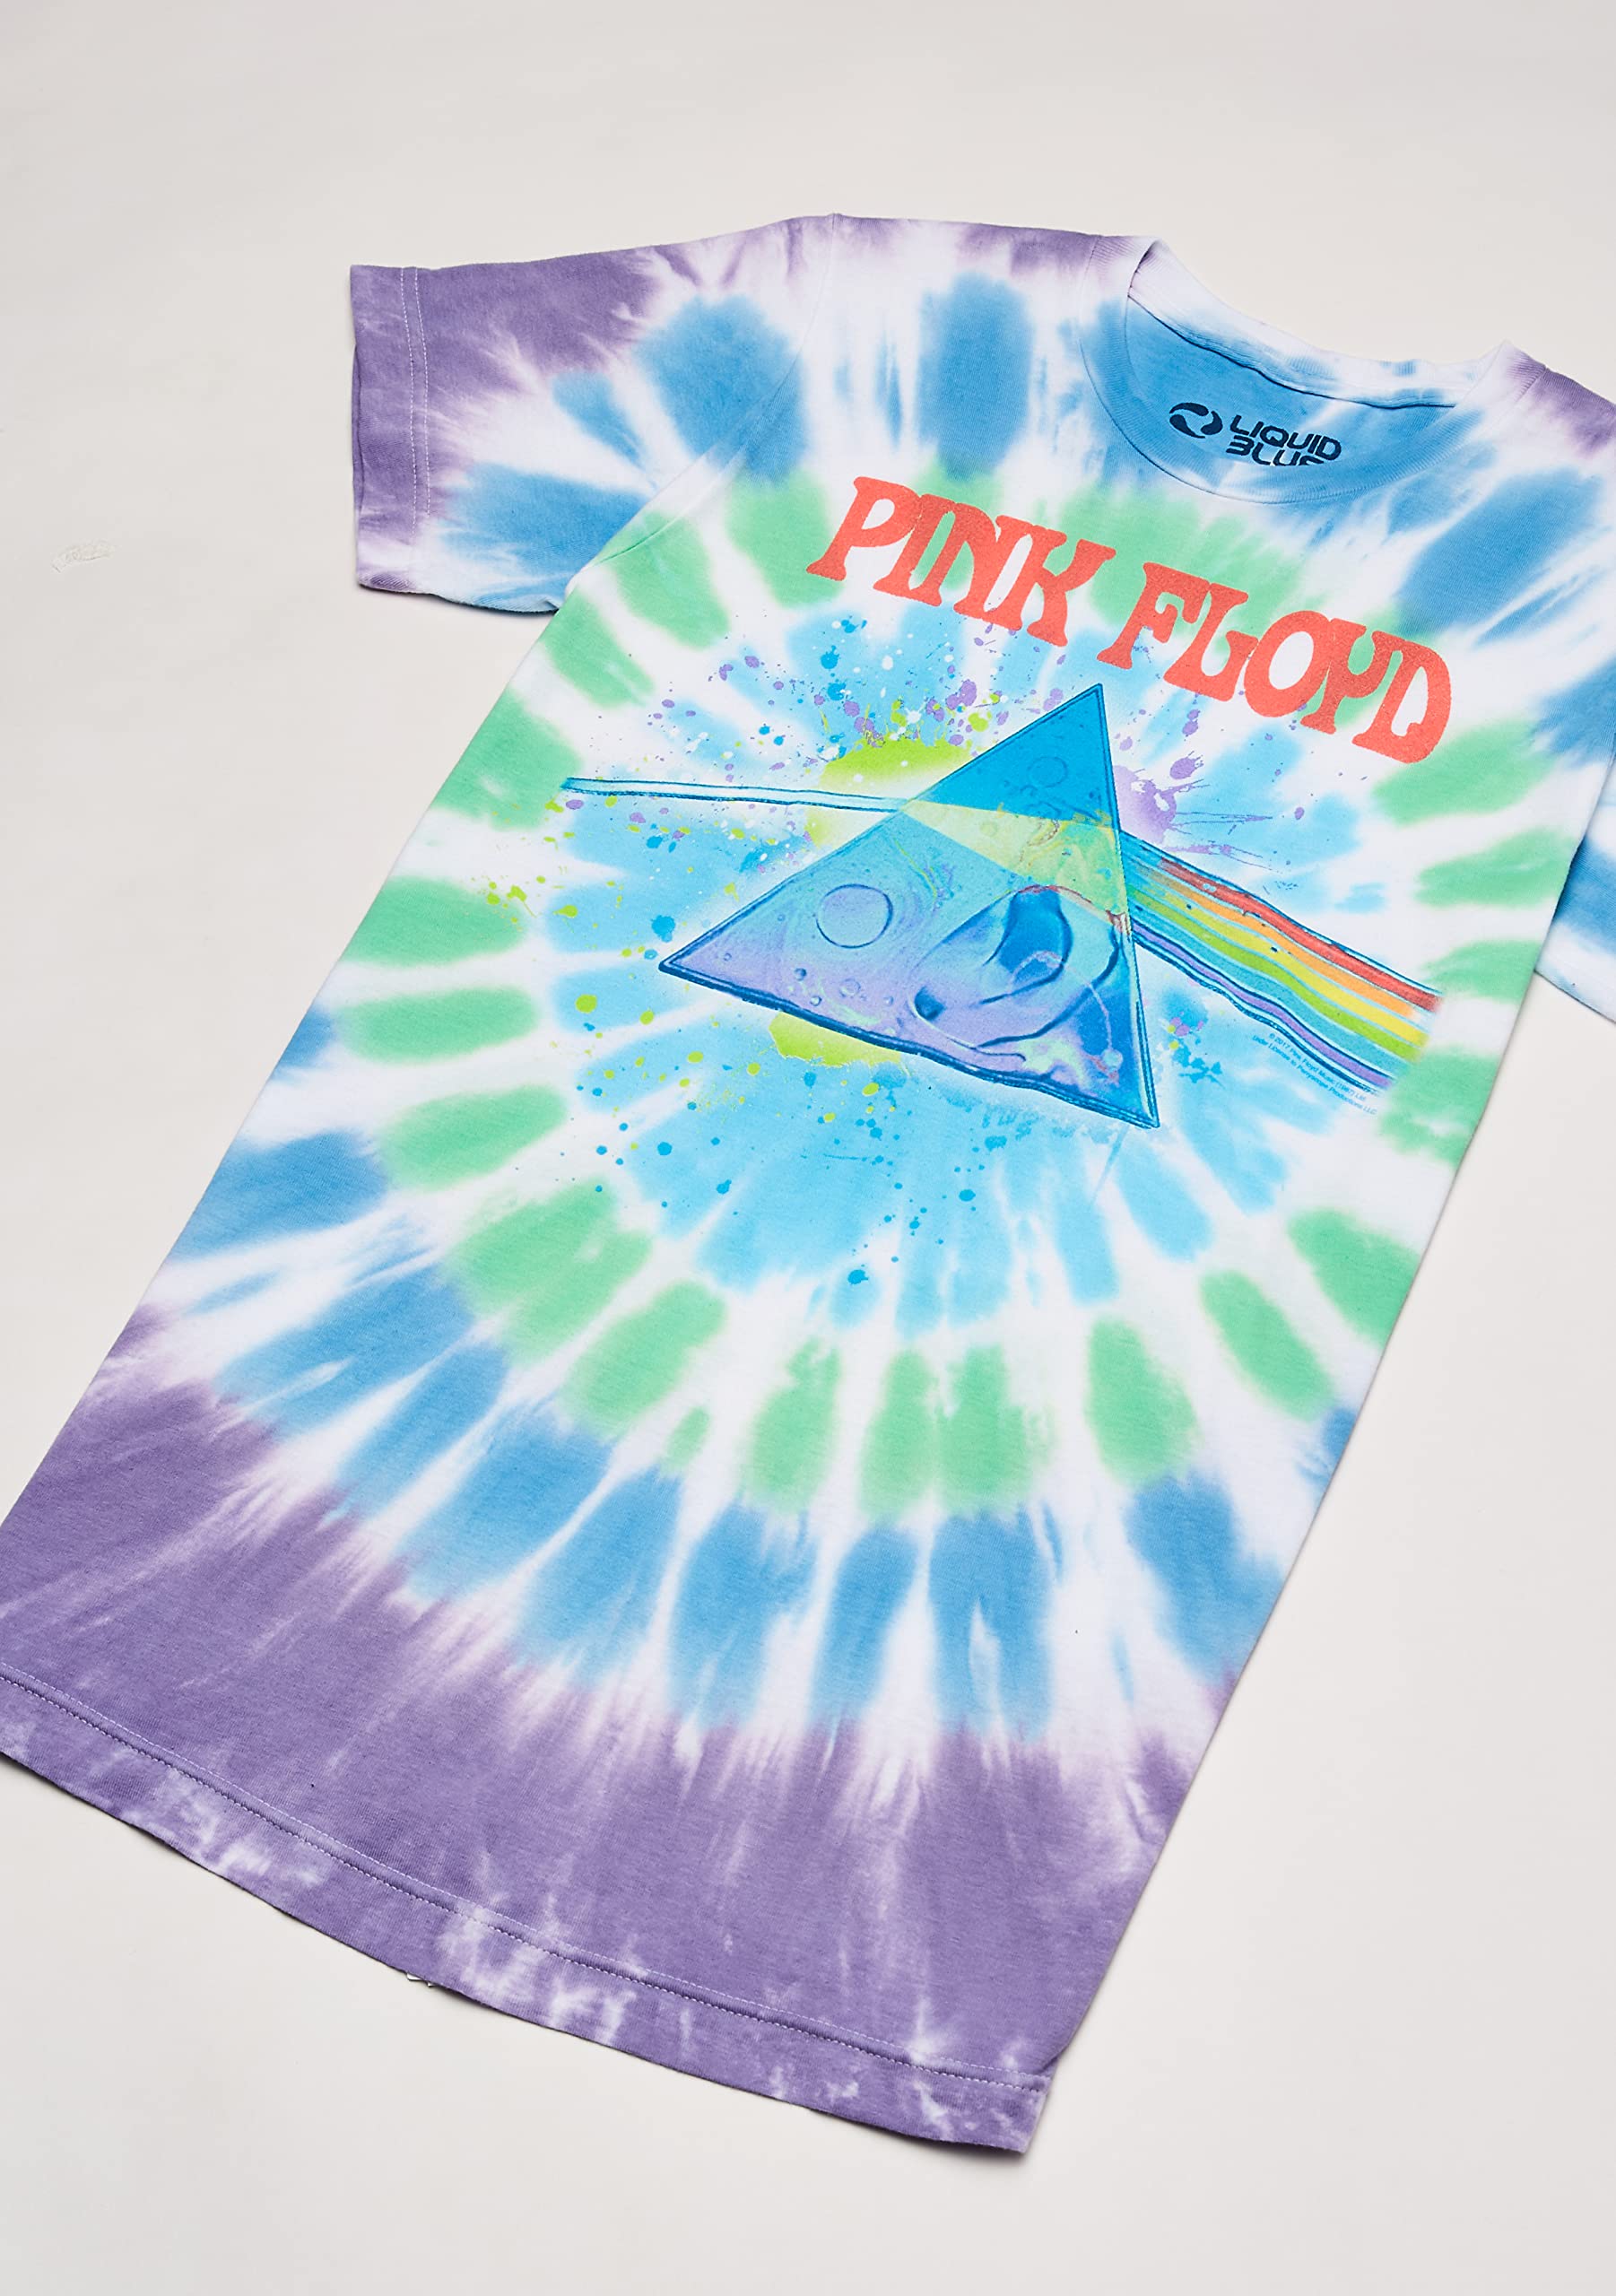 Liquid Blue Men's Pink Floyd Dark Side Oil Paint Tie Dye Short Sleeve T-Shirt